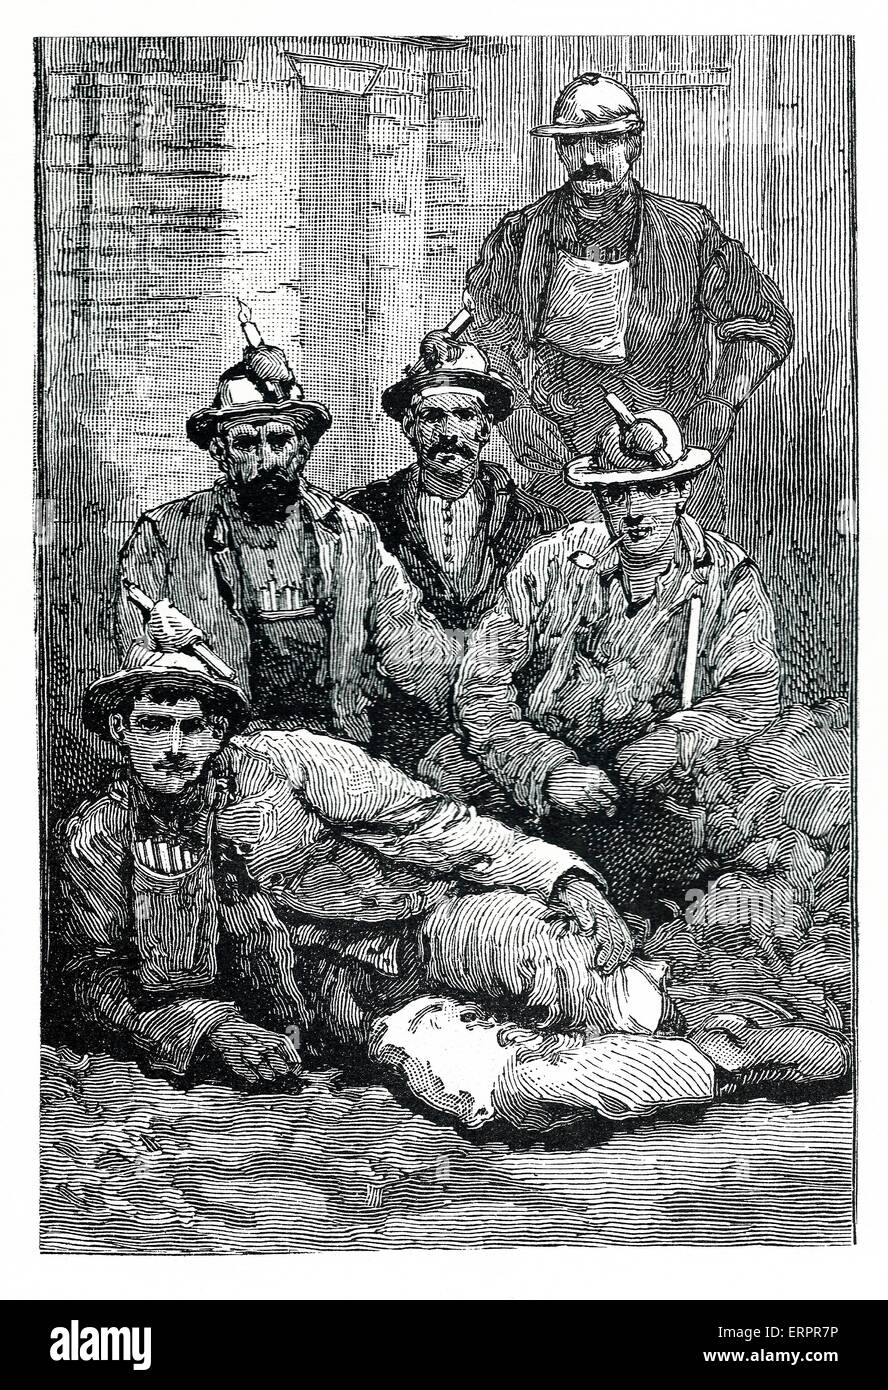 Portrait of miners, historic illustration. Stock Photo